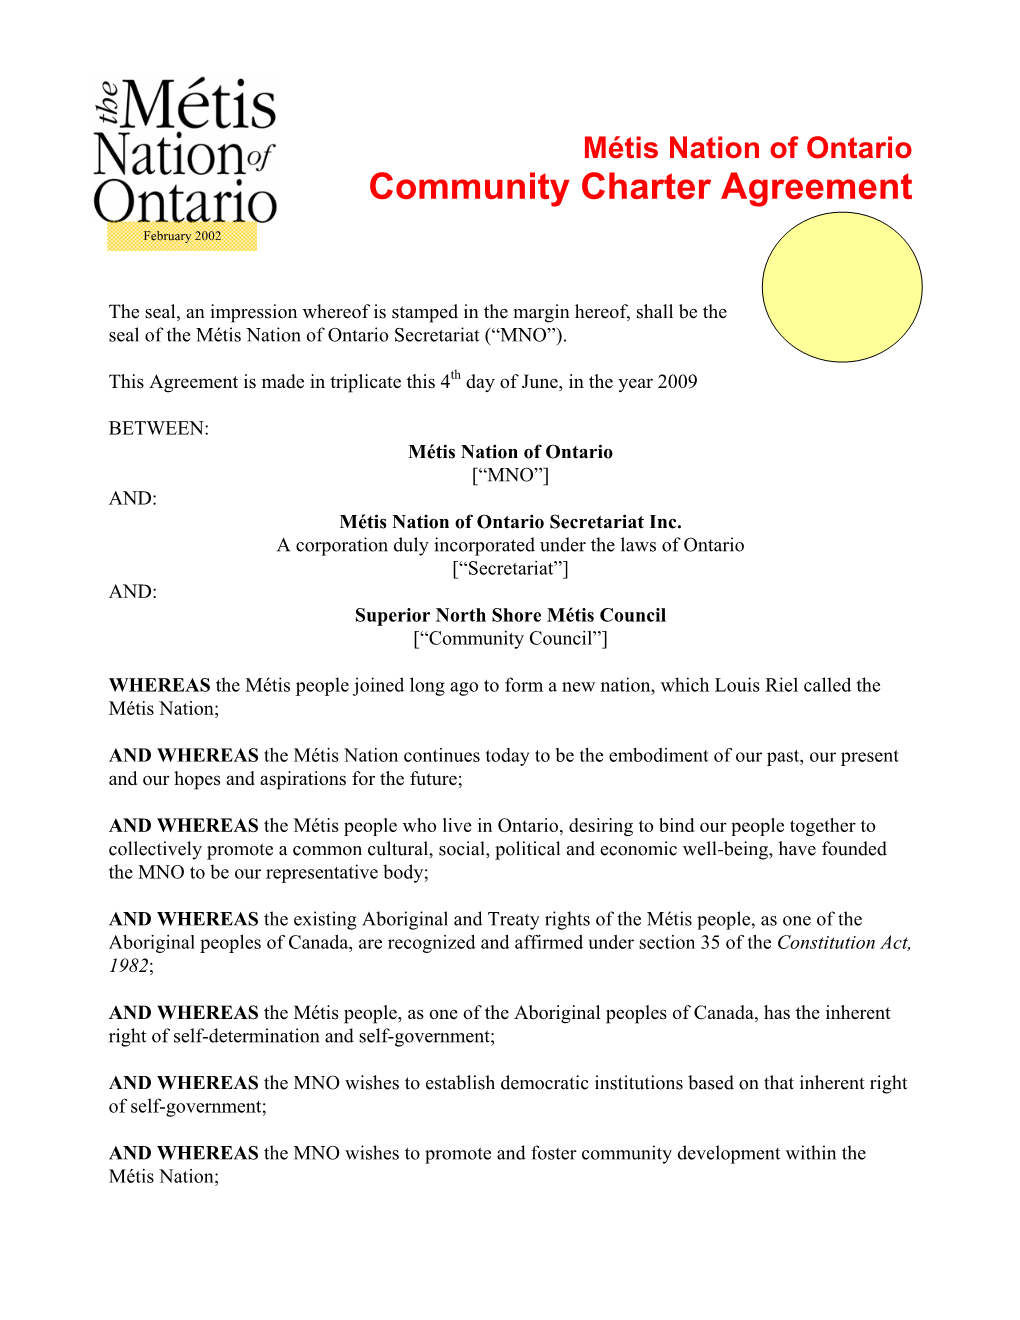 Community Charter Agreement